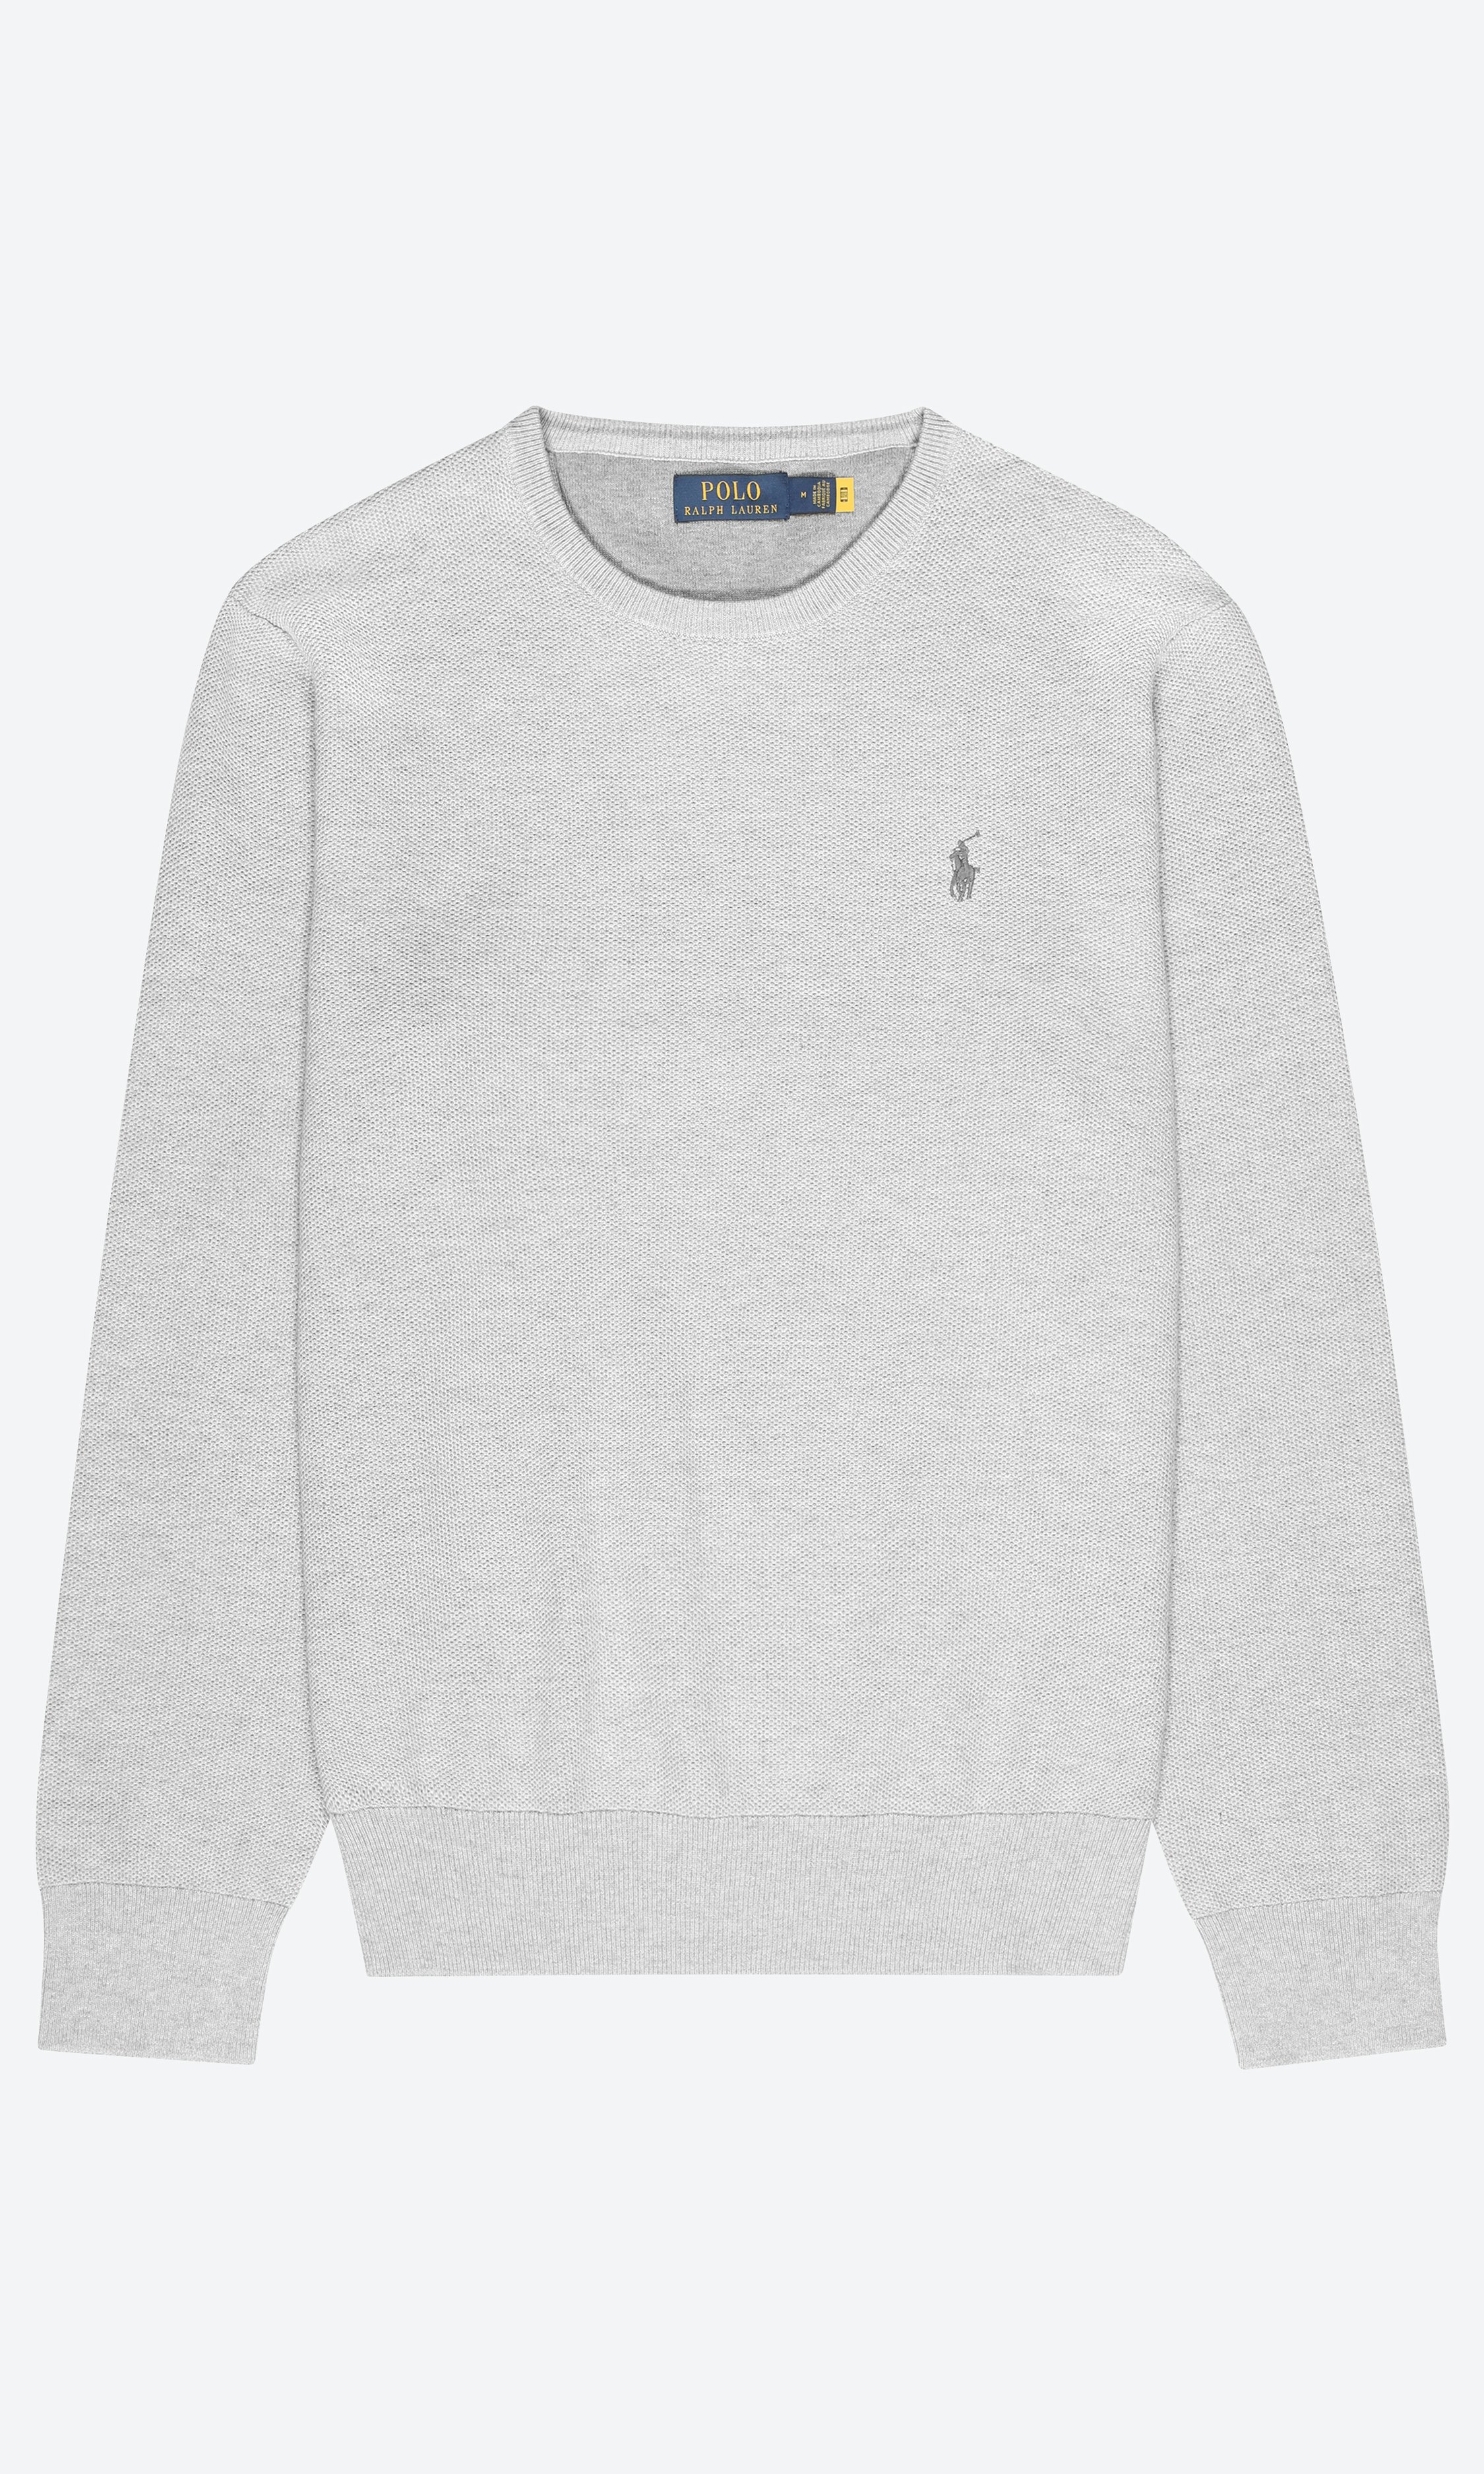 Polo Ralph Lauren Textured Cotton Crewneck Sweater Grey melange 